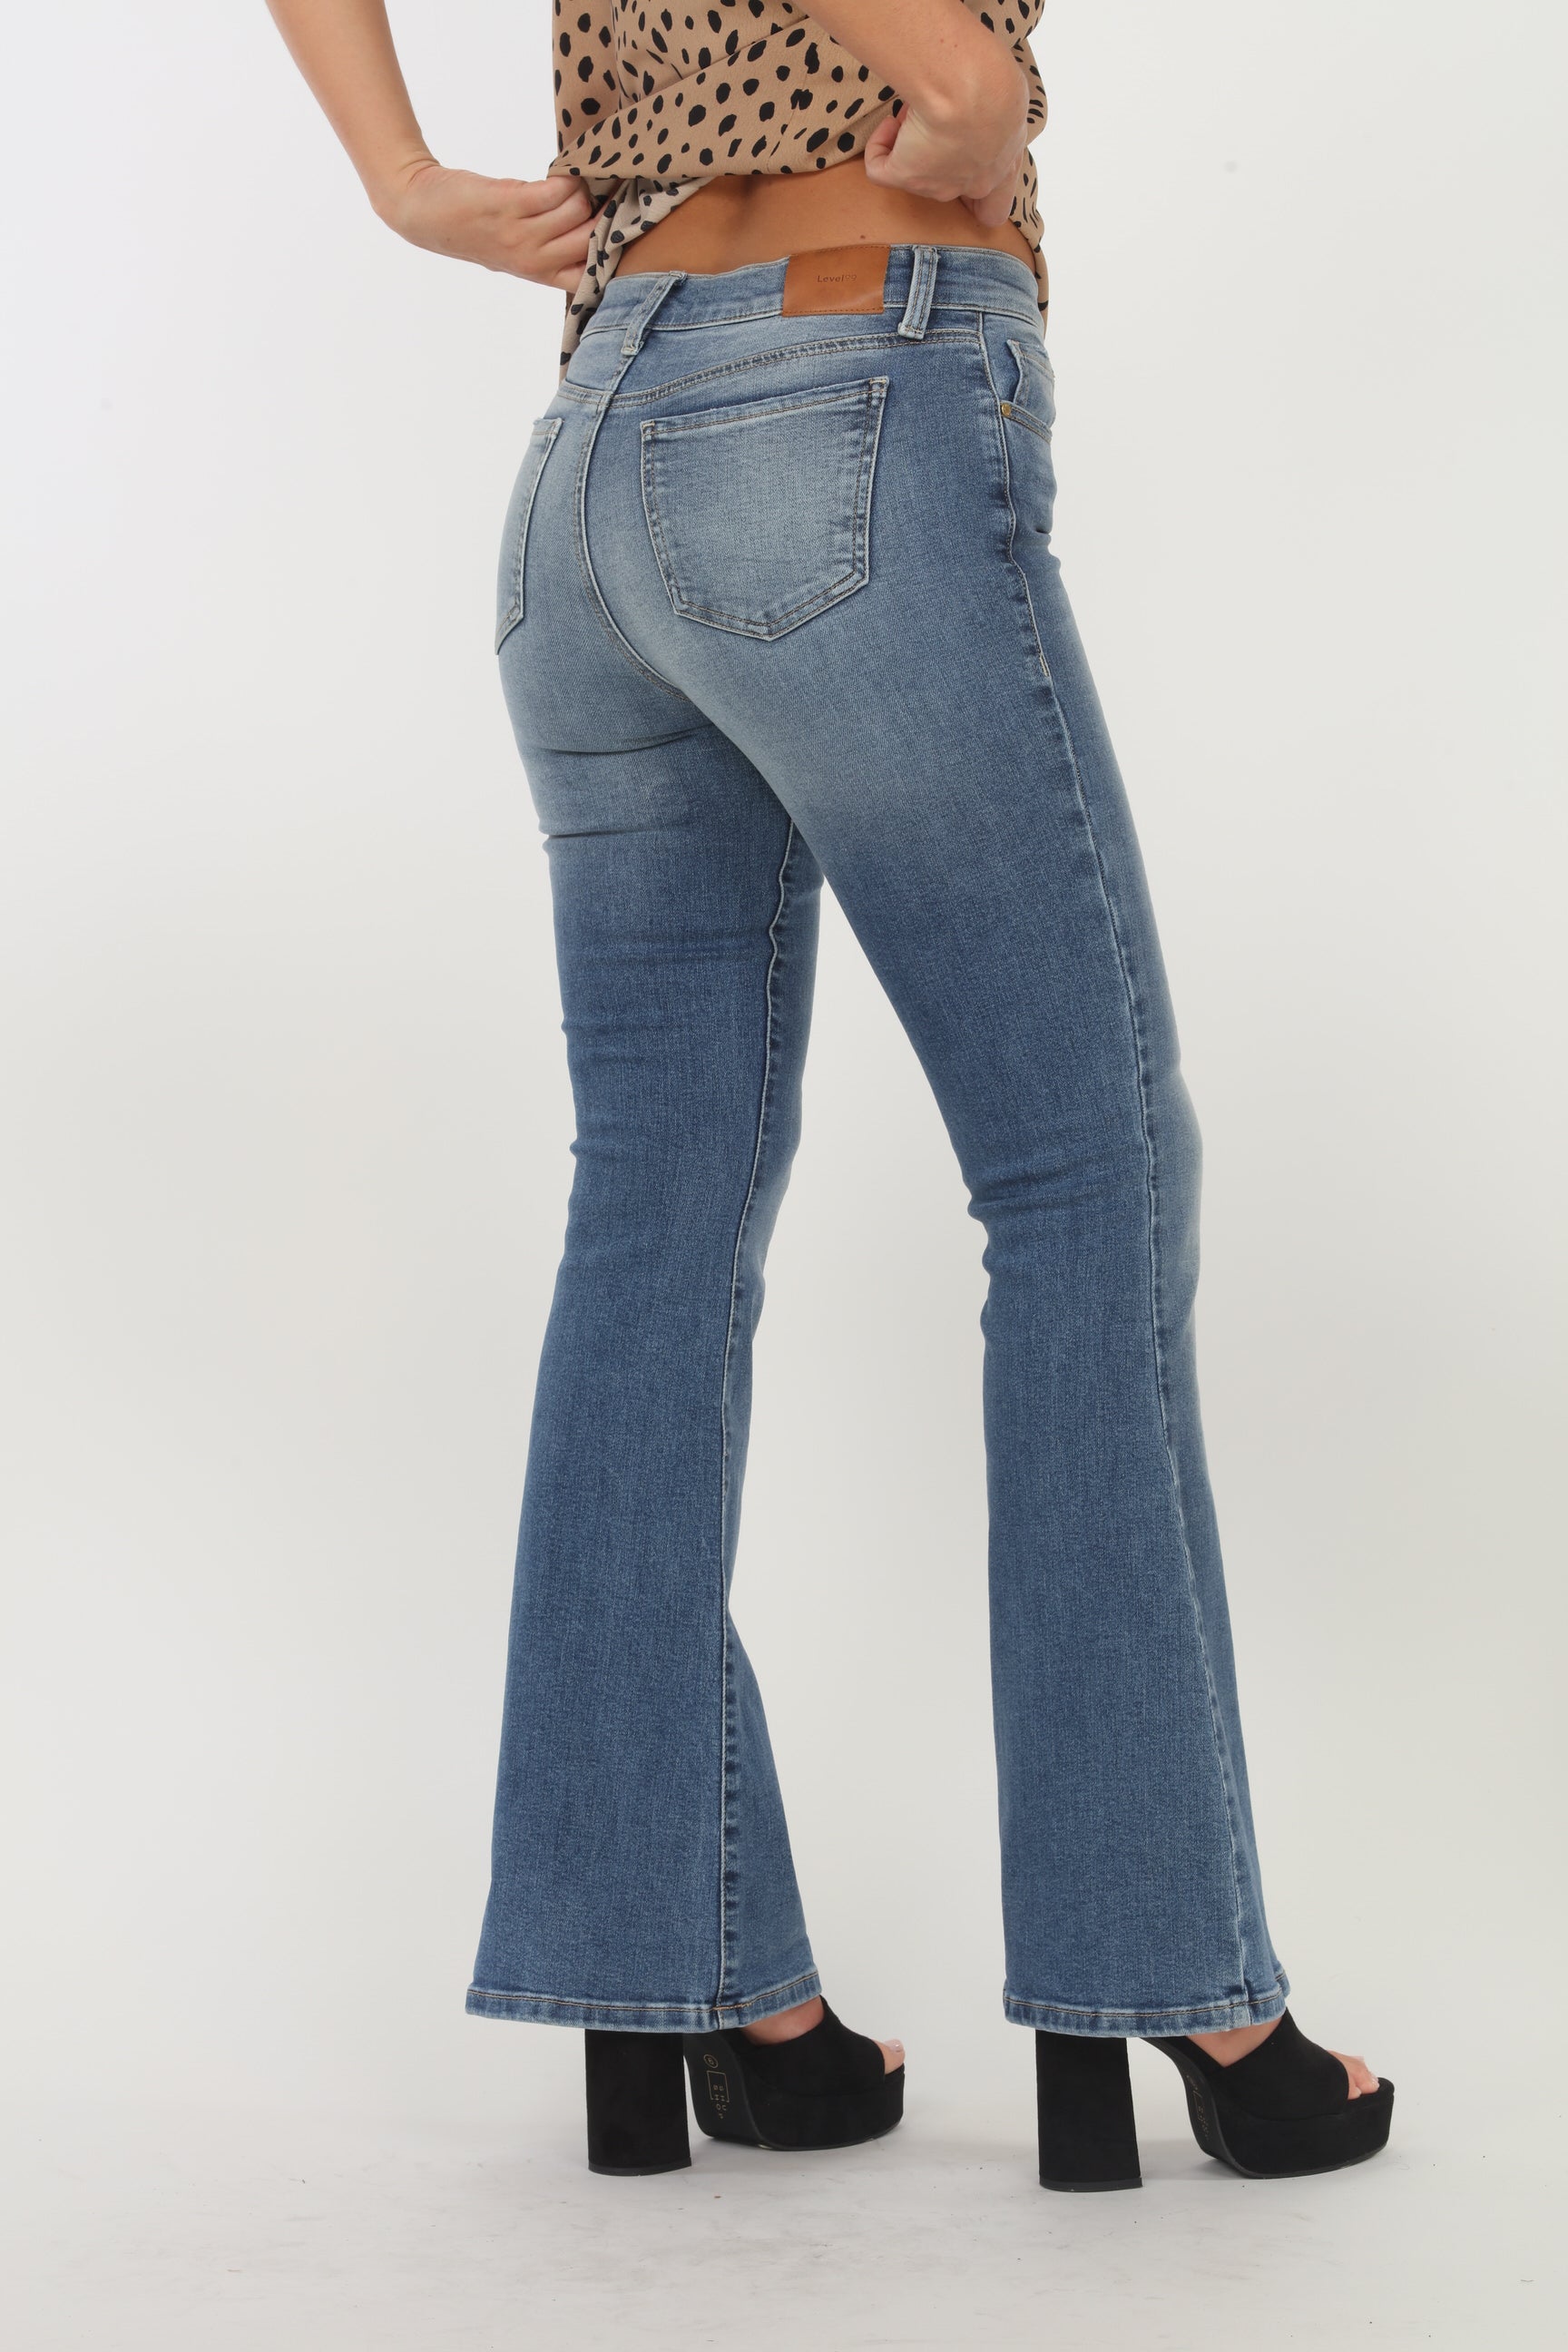 Level 99 Dahlia Mid Rise Flare Jeans - Medium Wash